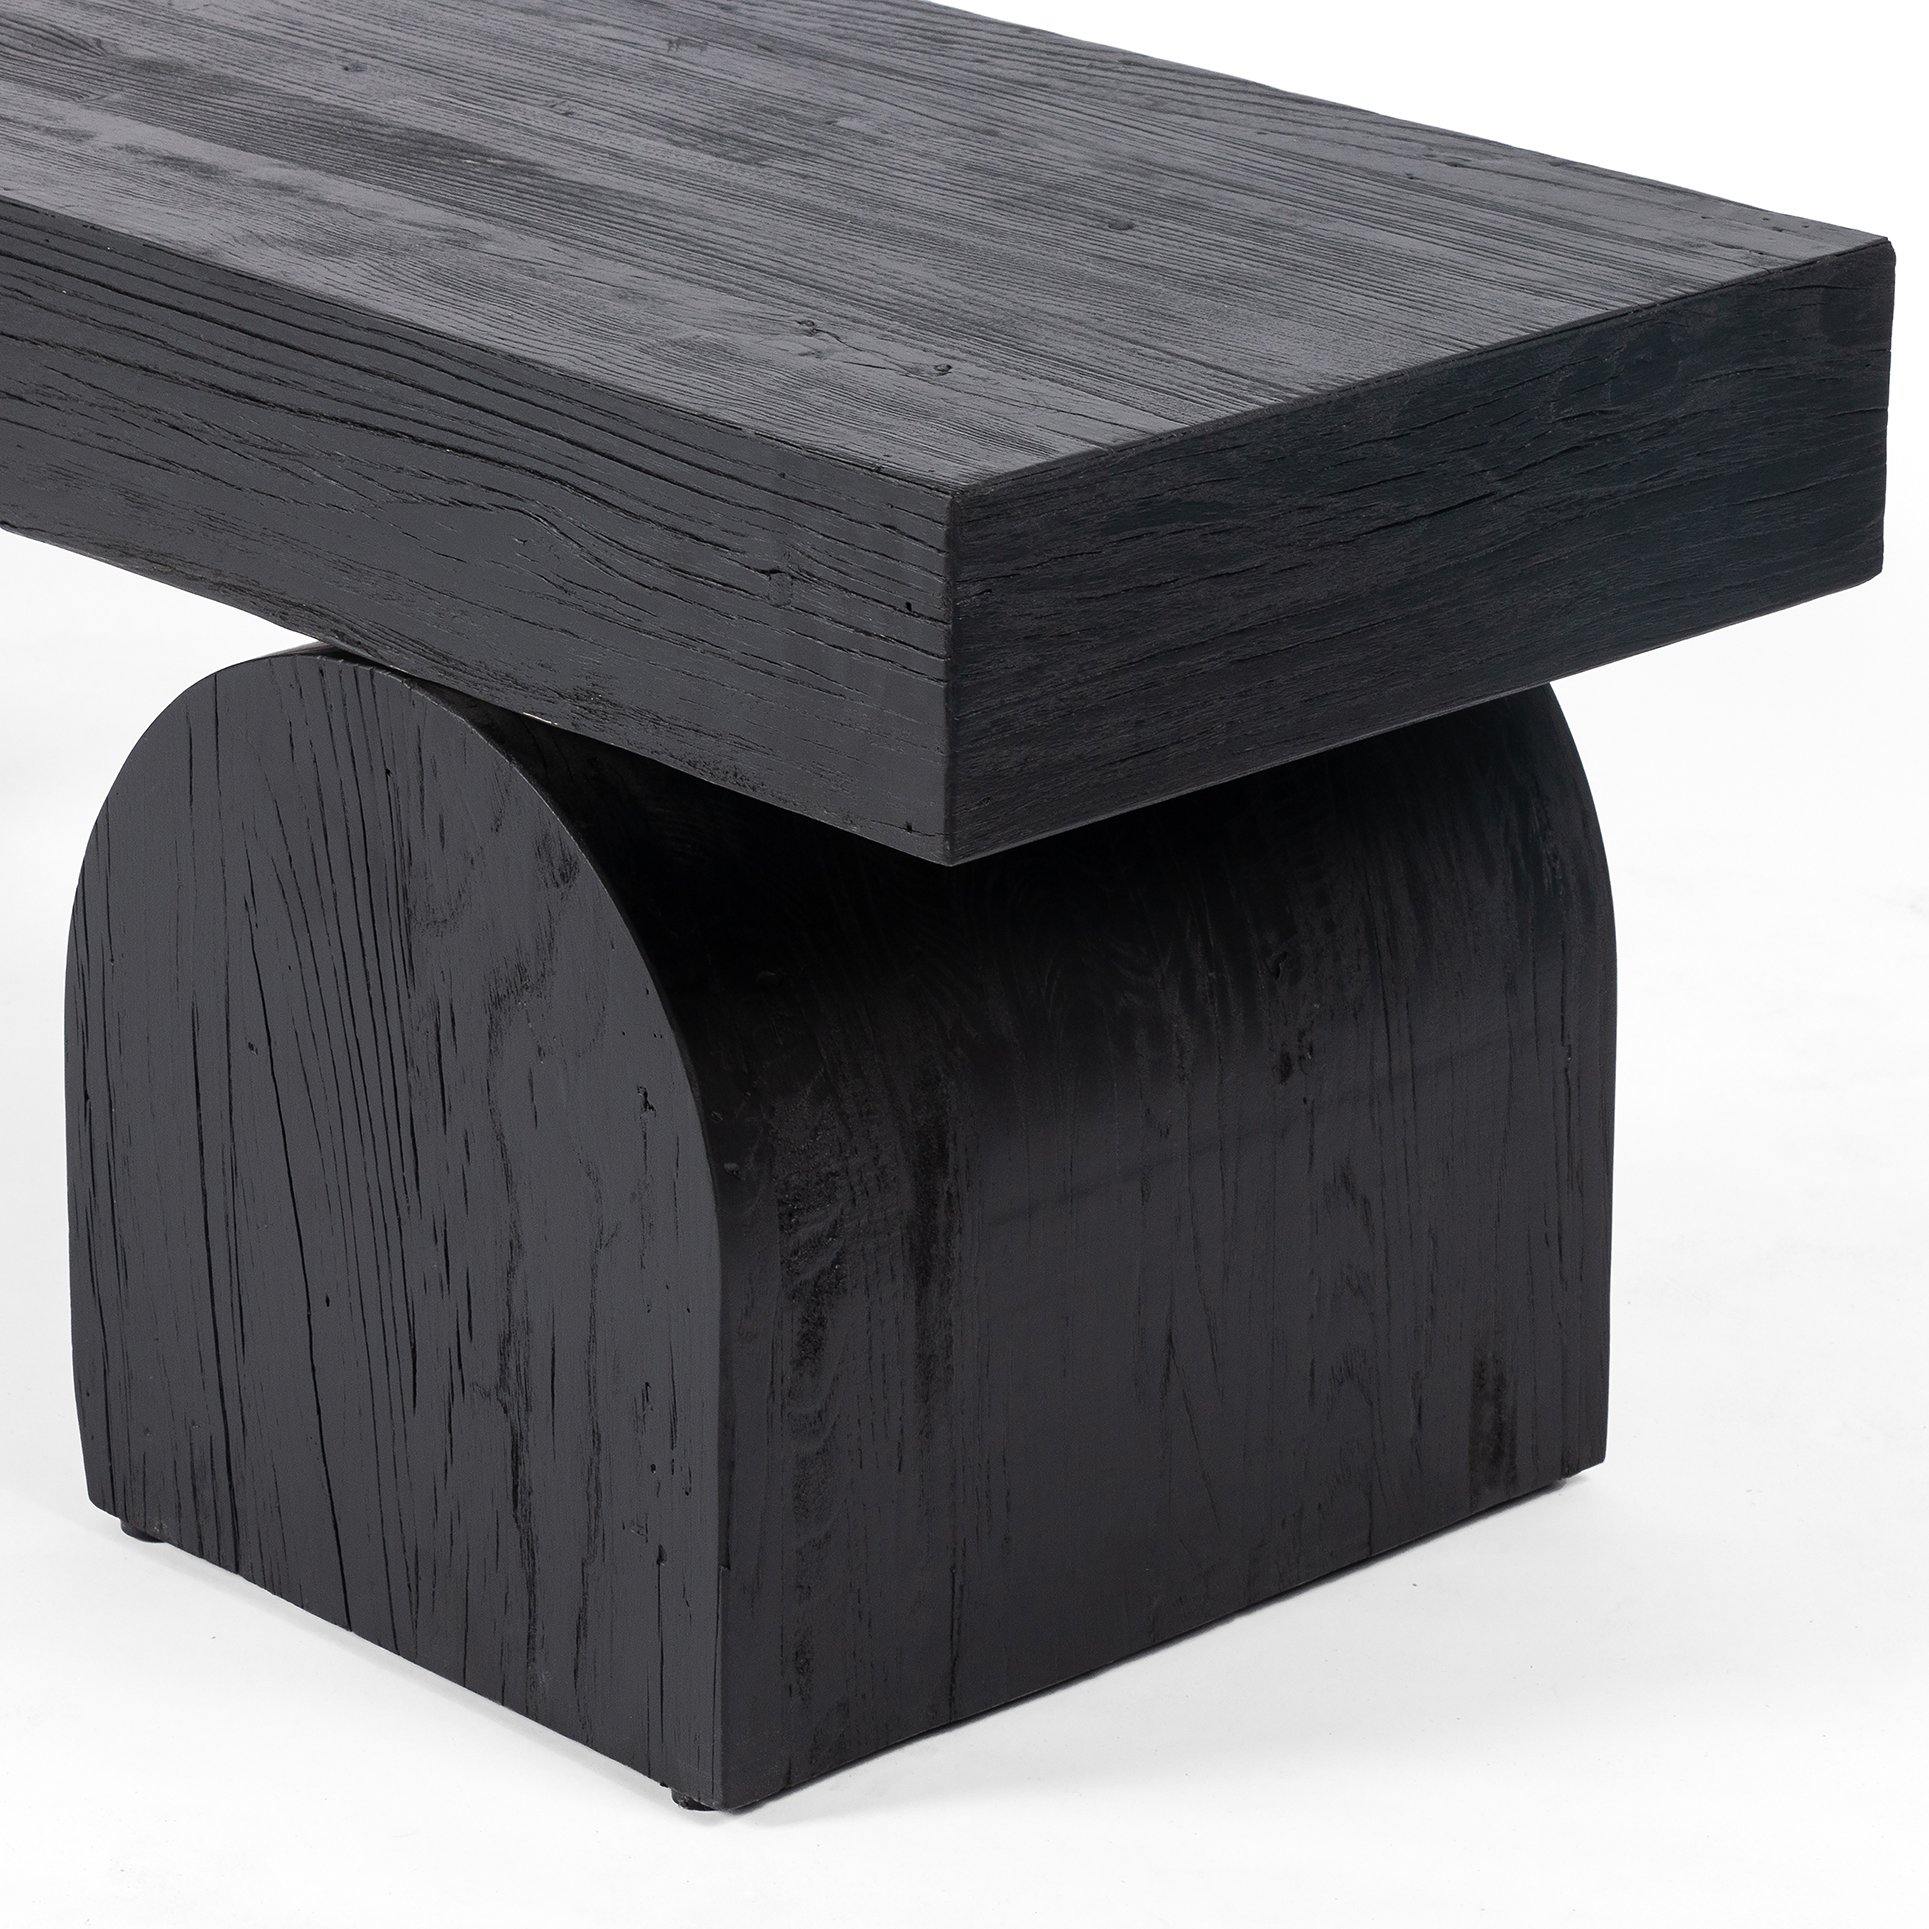 KEANE BENCH, BLACK ELM - Reimagine Designs - bench, new